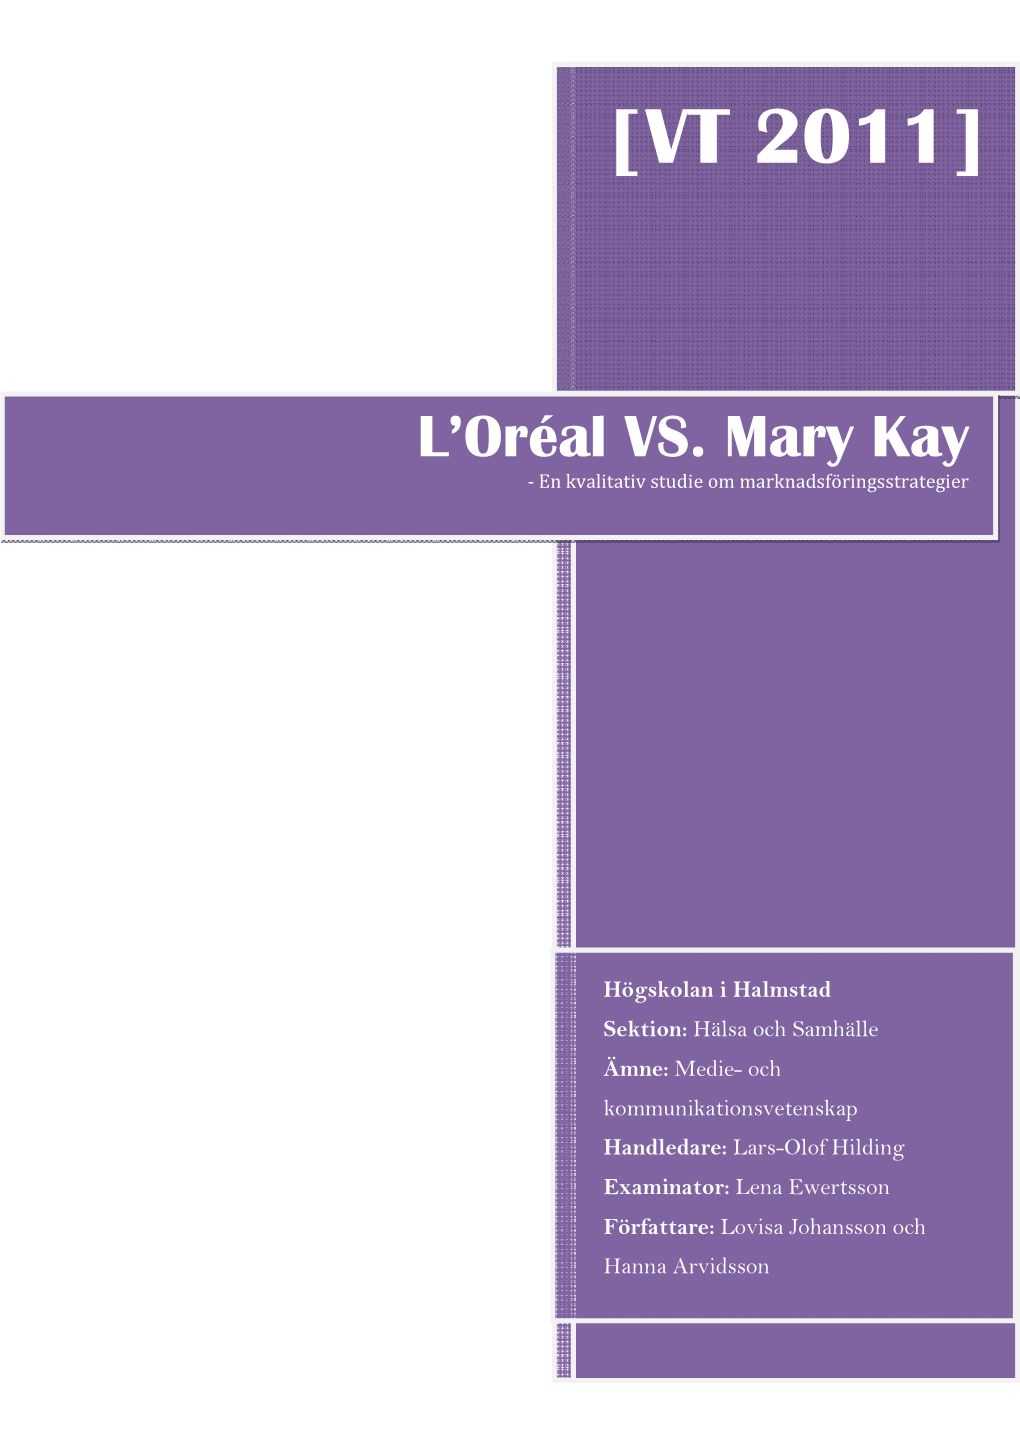 L'oréal VS. Mary